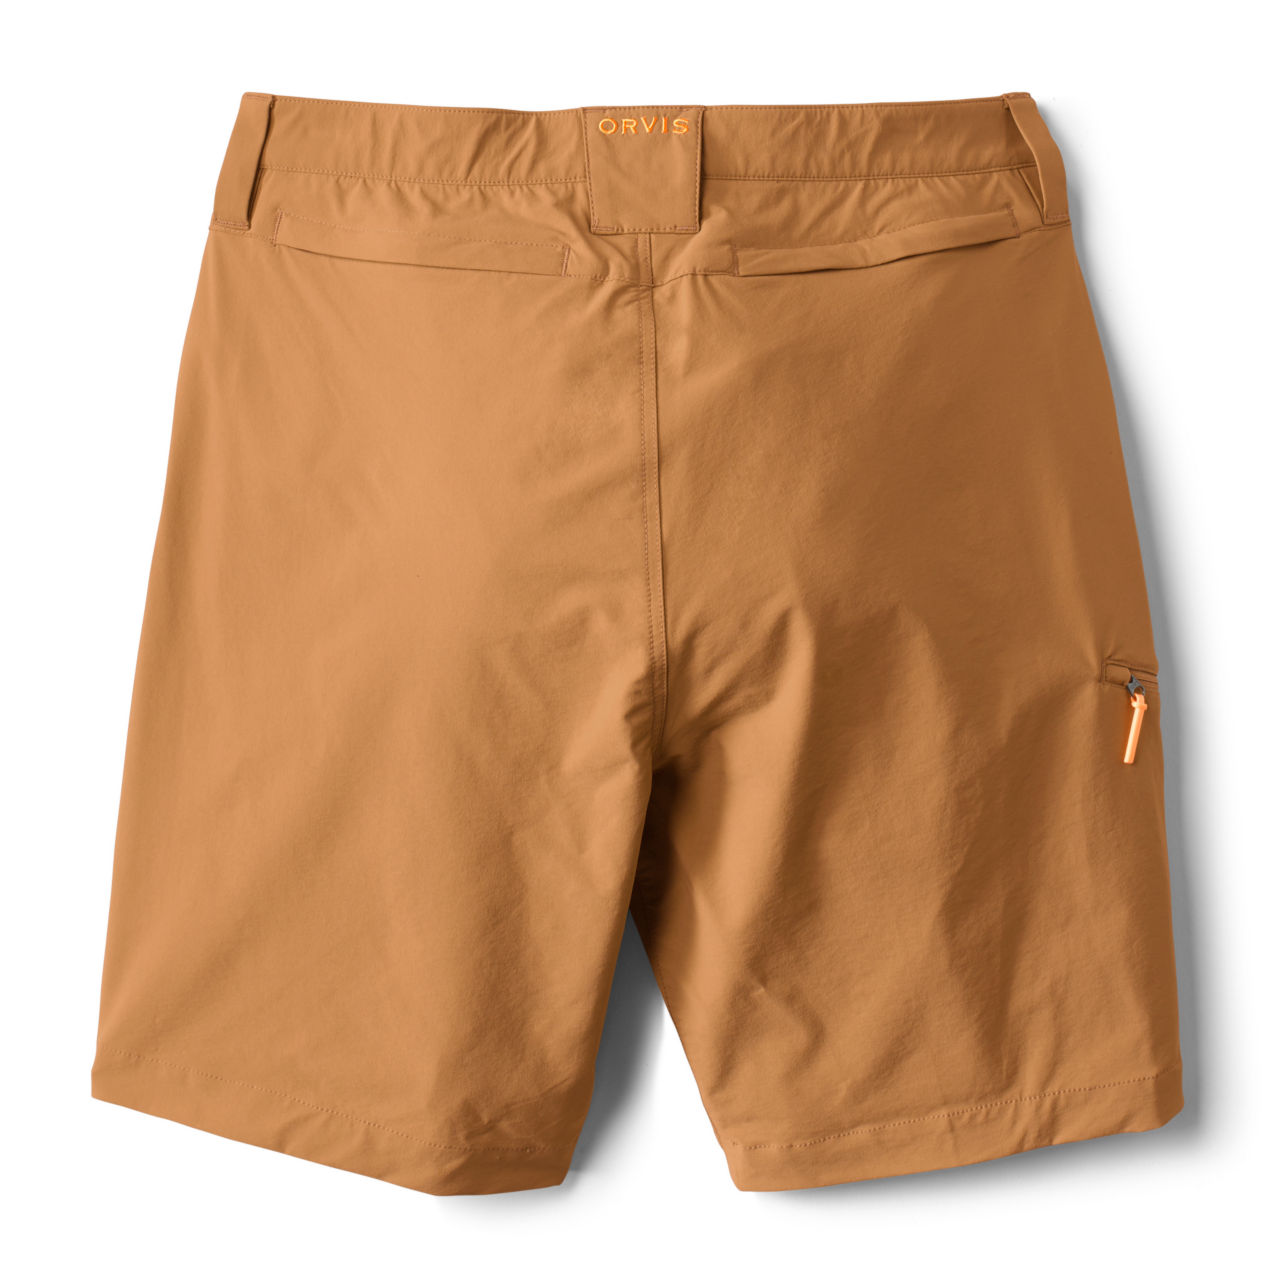 Jackson Quick-Dry Shorts -  image number 2